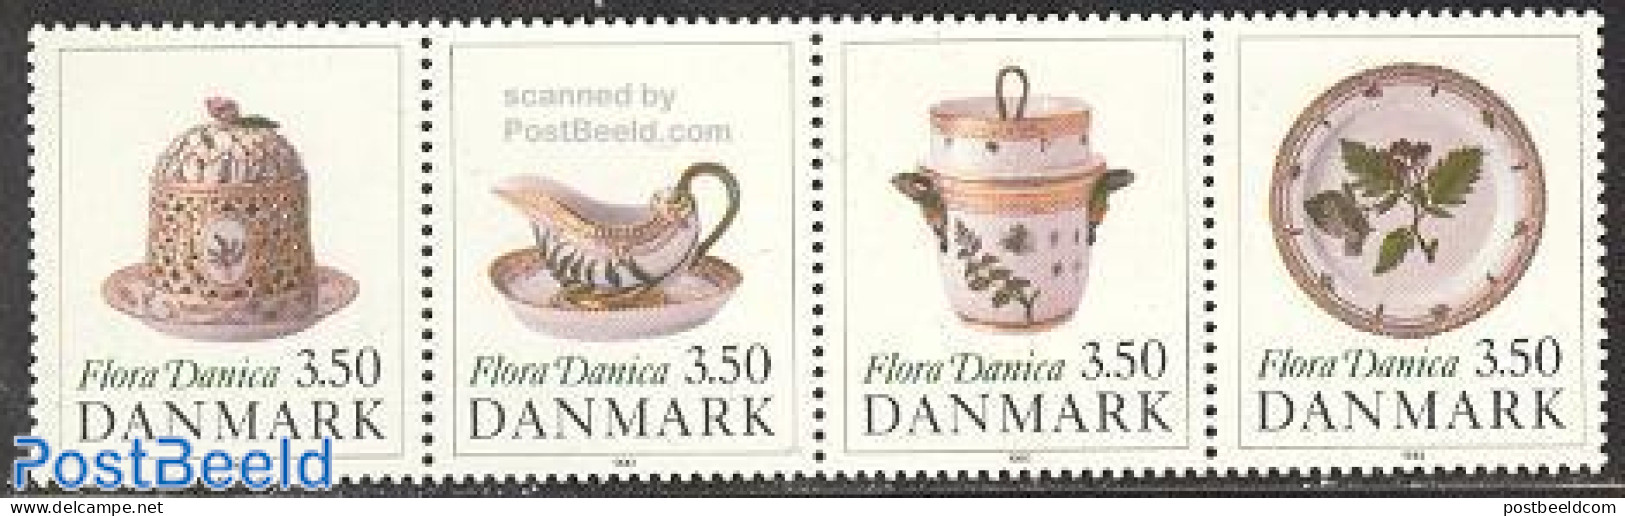 Denmark 1990 Porcelain 4v [:::], Mint NH, Art - Art & Antique Objects - Ceramics - Nuovi